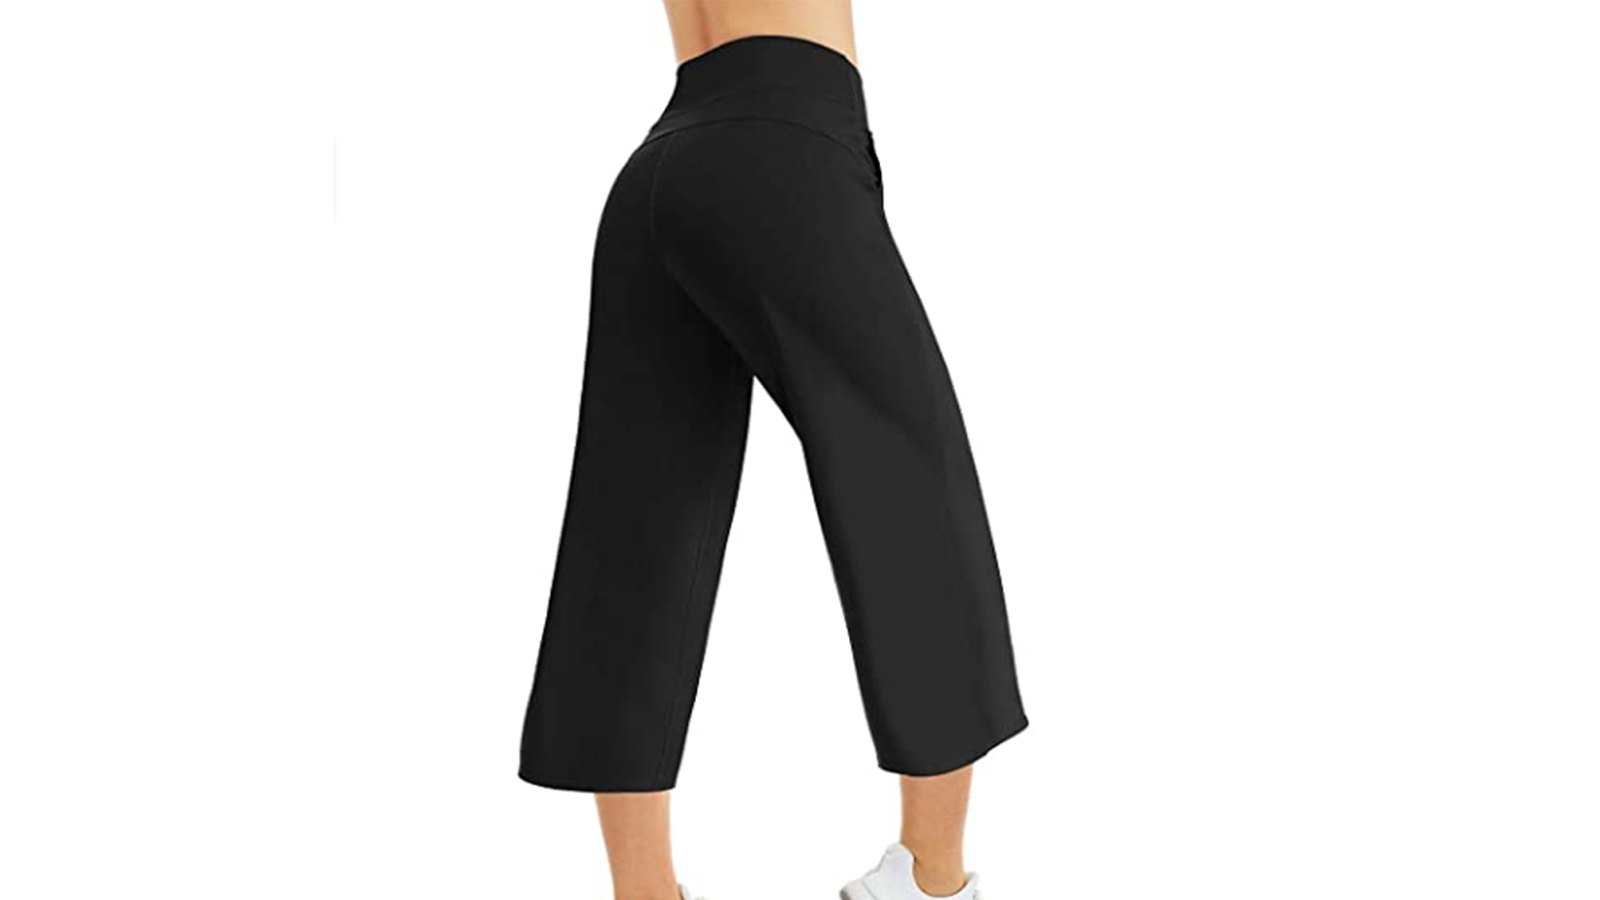 THE GYM PEOPLE Bootleg Yoga Capris Pants for Women